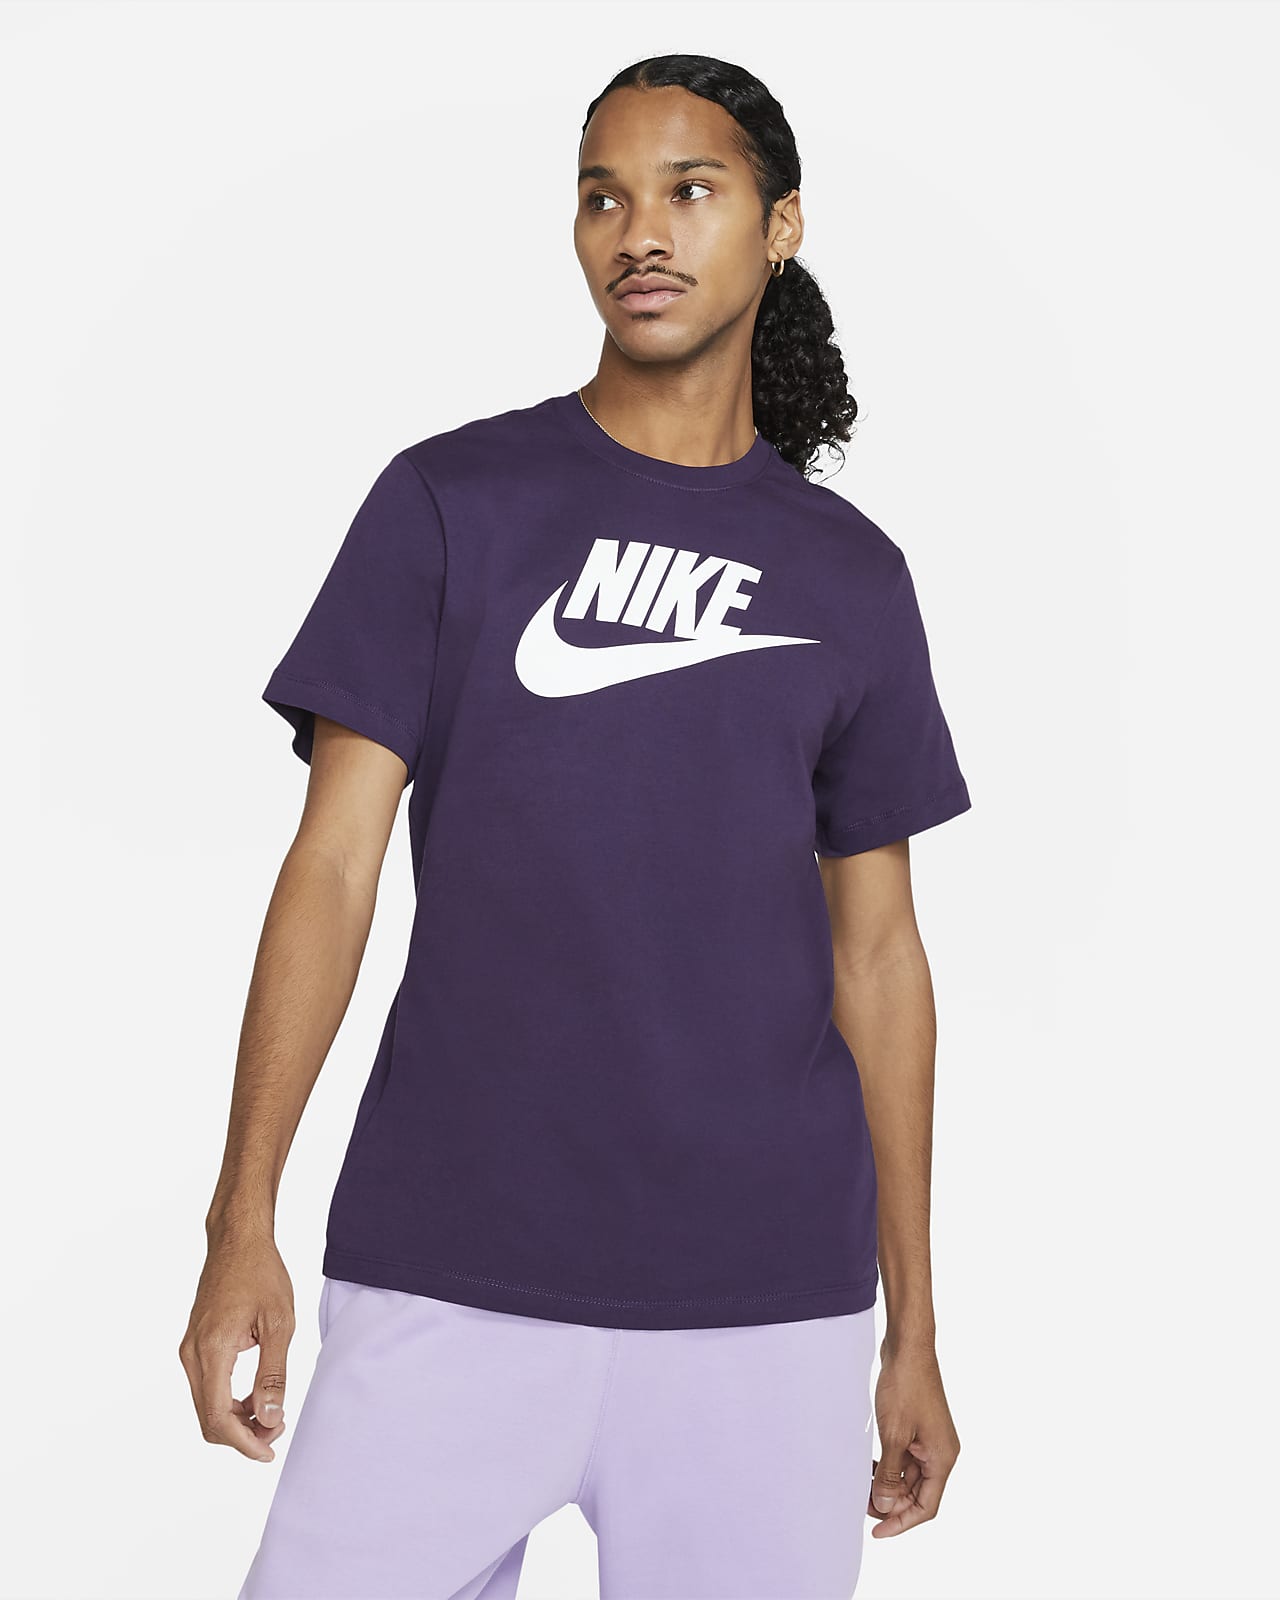 purple and teal nike shirt